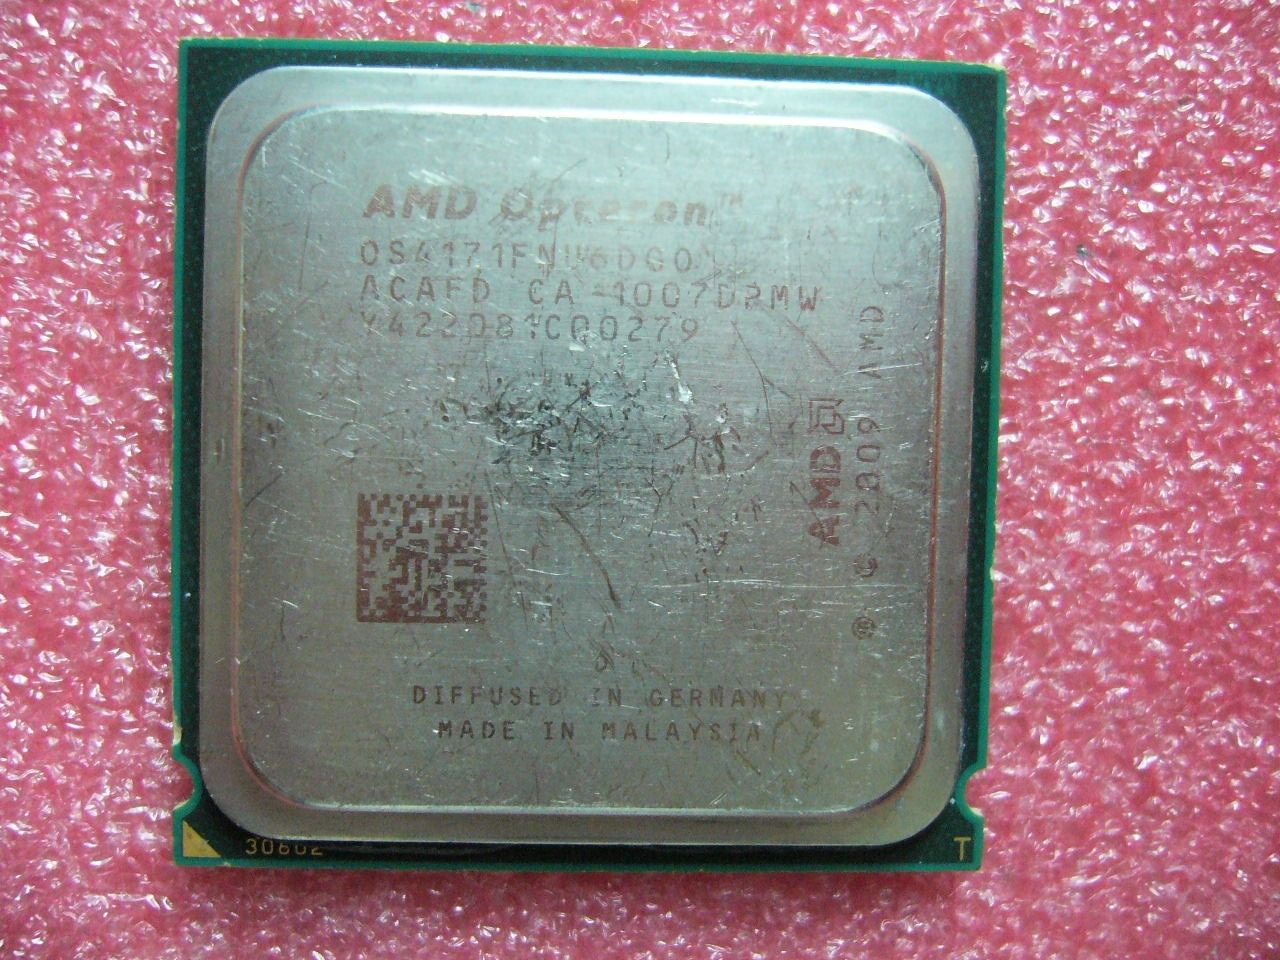 QTY 1x AMD Opteron 4171 HE 2.1 GHz Six Core (OS4171FNU6DGO) CPU Socket C32 - Click Image to Close